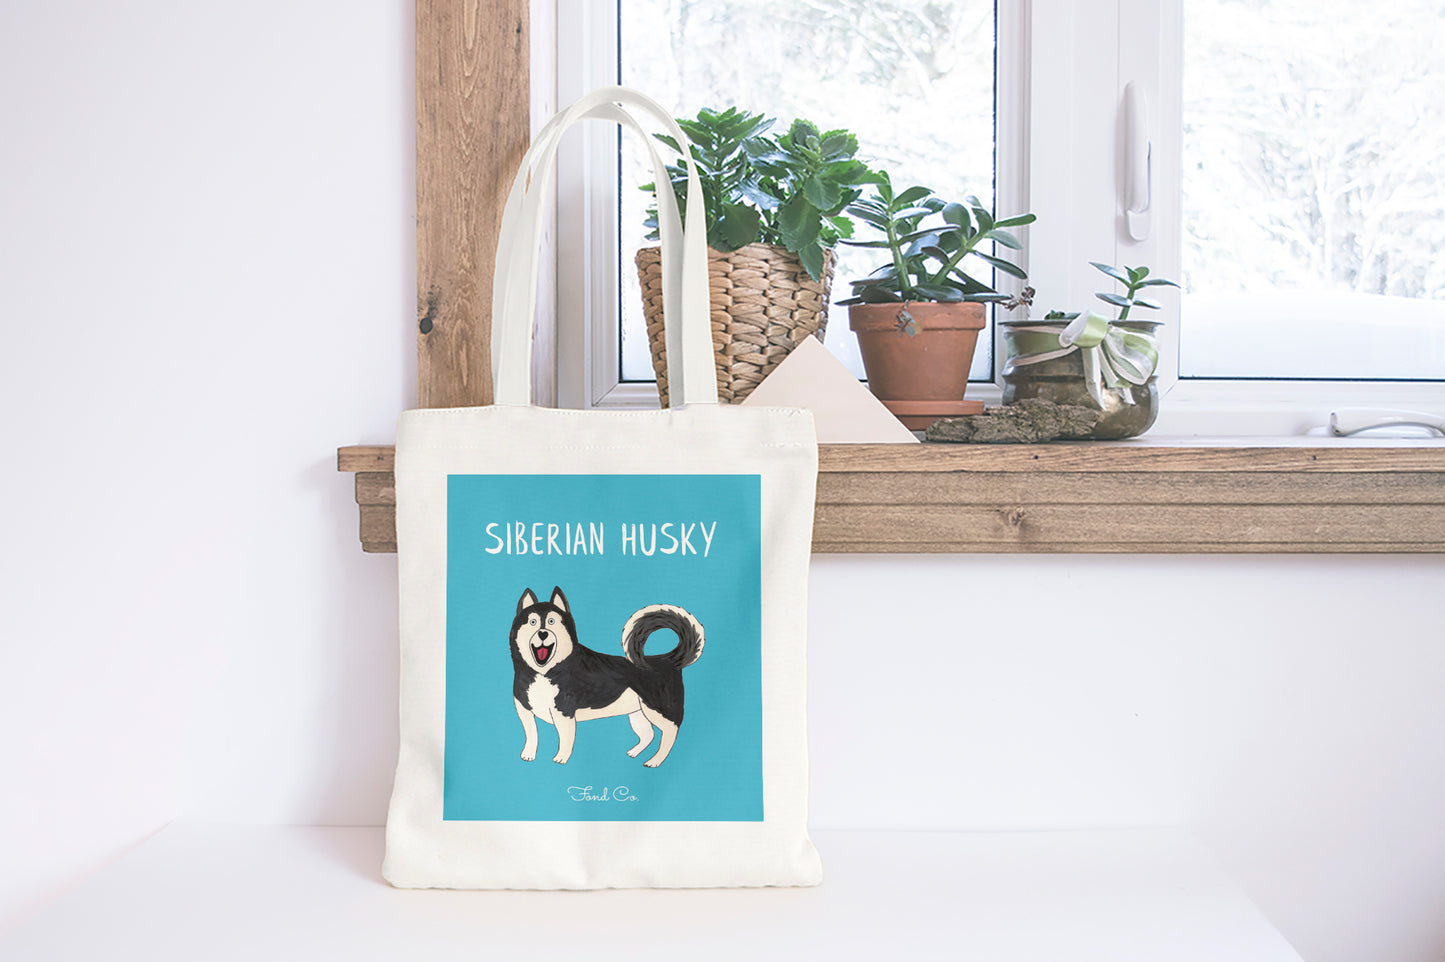 Illustrated Husky tote bag